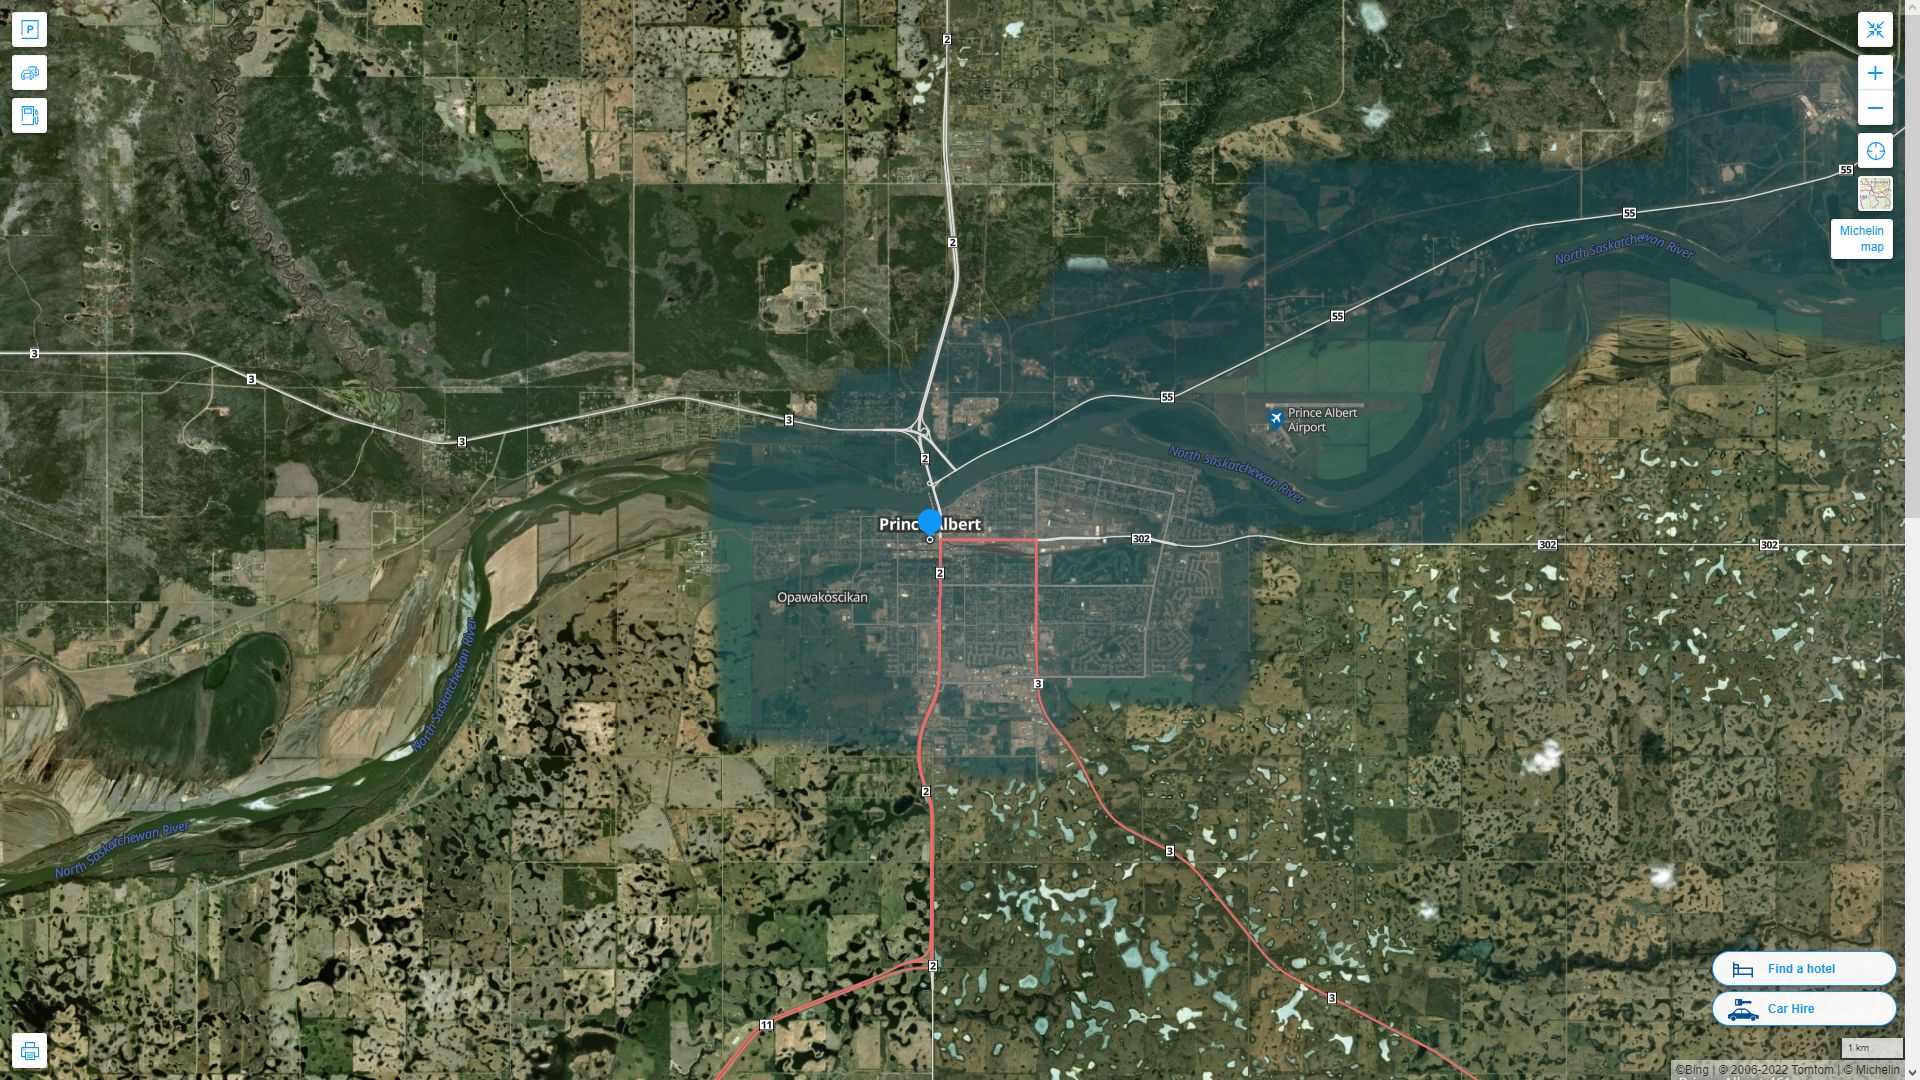 Prince Albert Canada Autoroute et carte routiere avec vue satellite